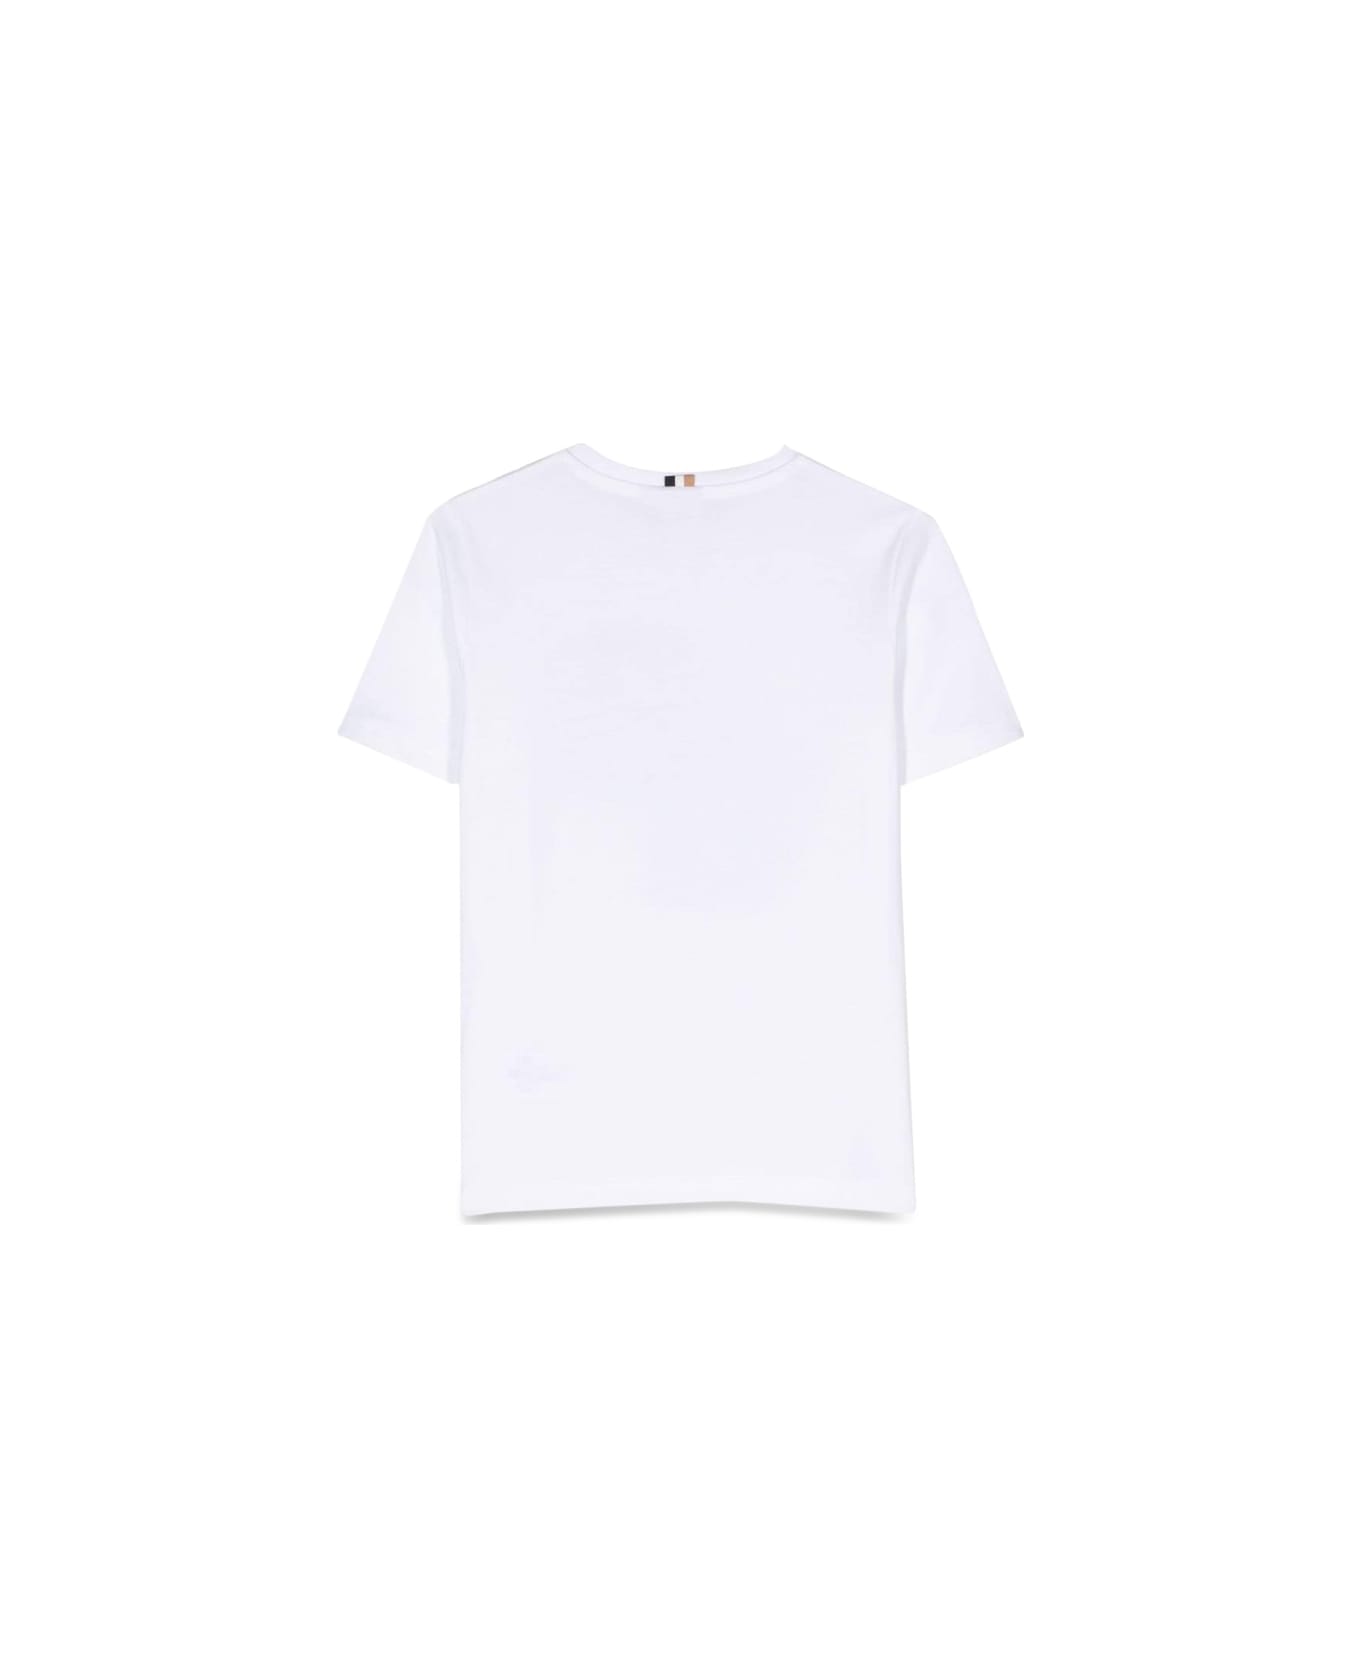 Hugo Boss T-shirt B - WHITE